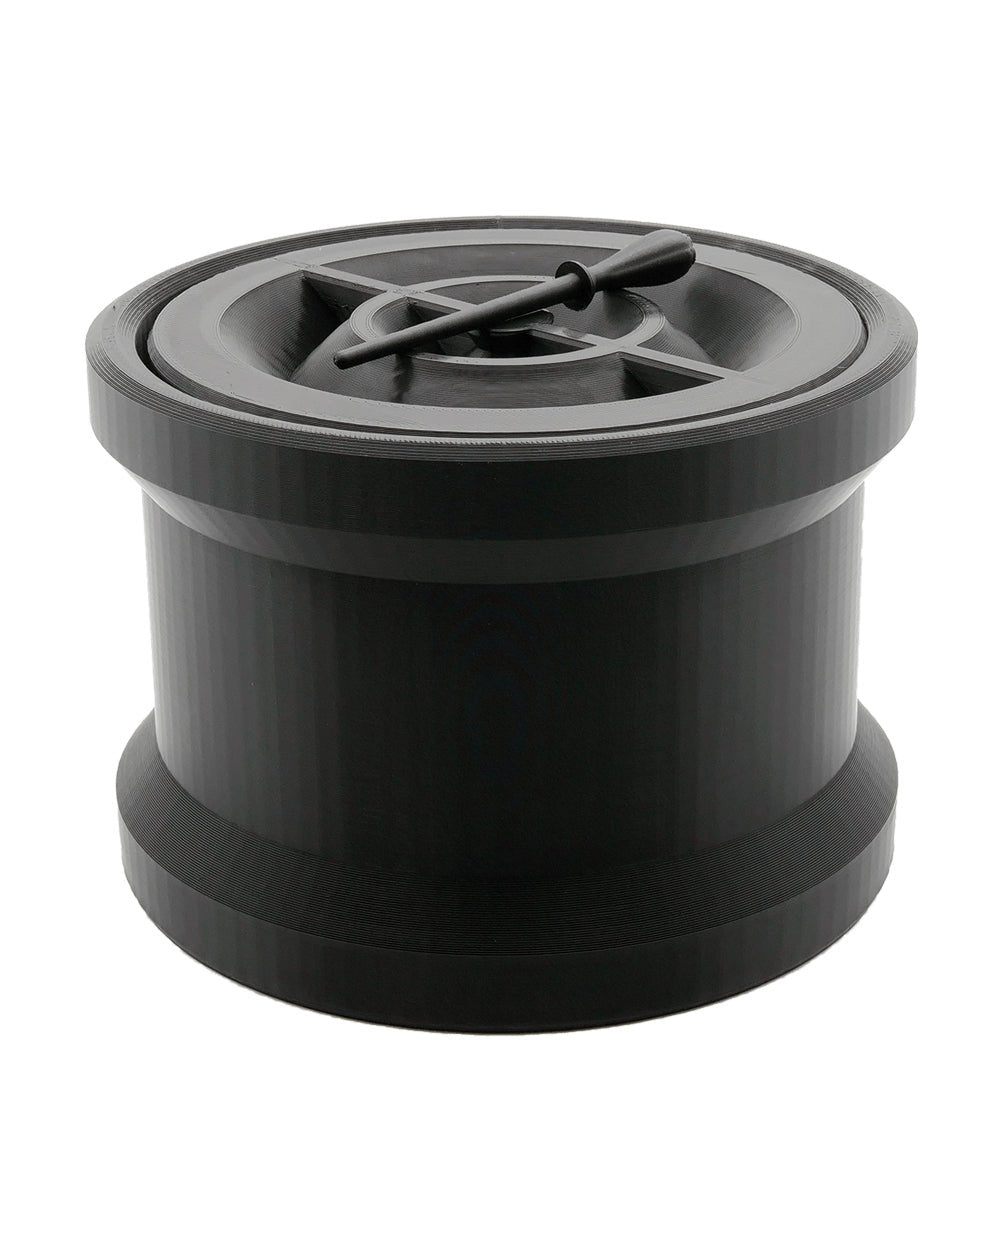 HUMBOLDT | Black Pre-Rolled Cones Filling Machine Starter Kit 109mm | Fill 121 Cones Per Run - 2